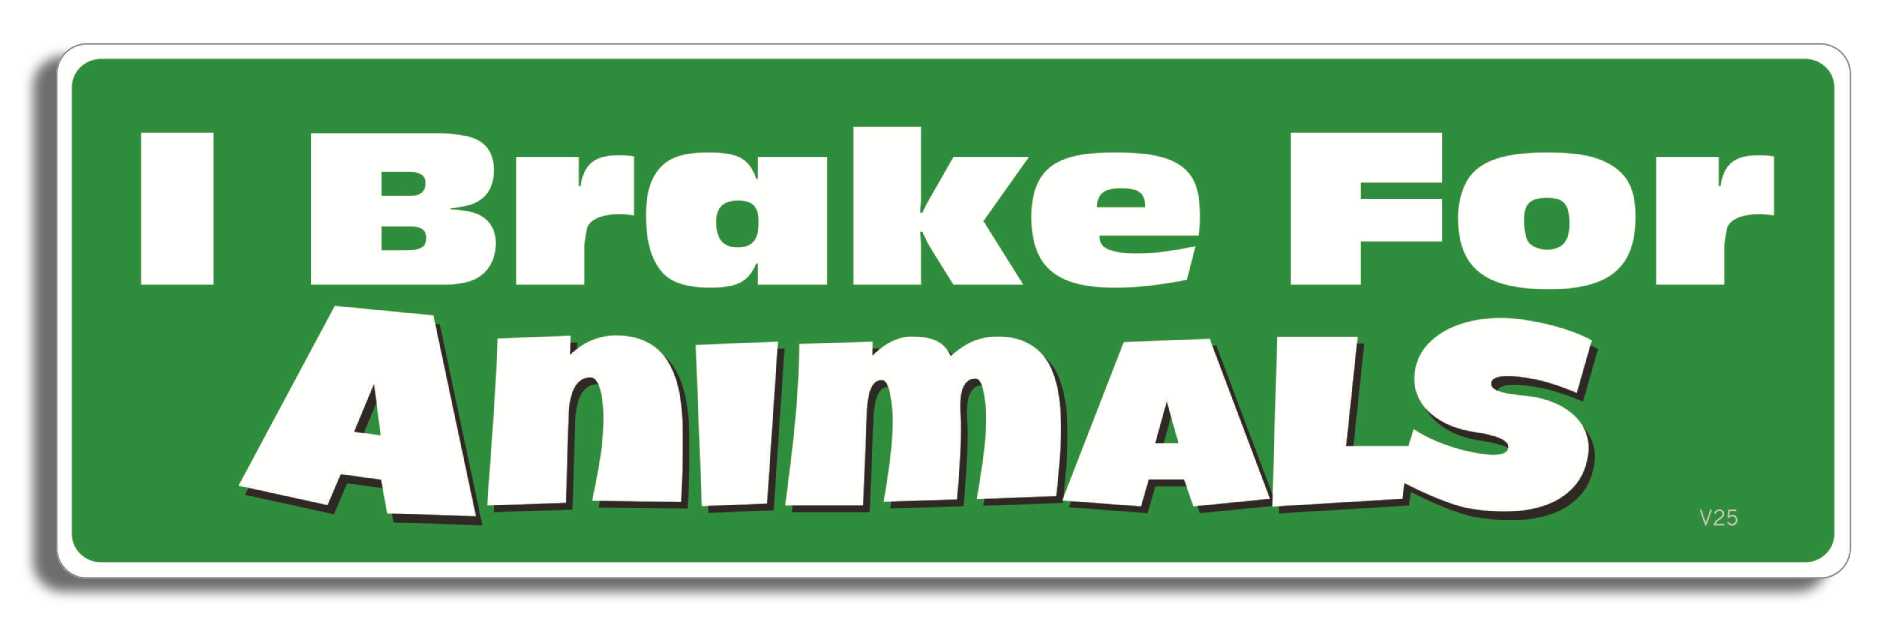 I brake for animals - 3" x 10" -  Decal Bumper Sticker-vagetarian Bumper Sticker Car Magnet I brake for animals-  Decal for carsanimal rights, peta, vegan